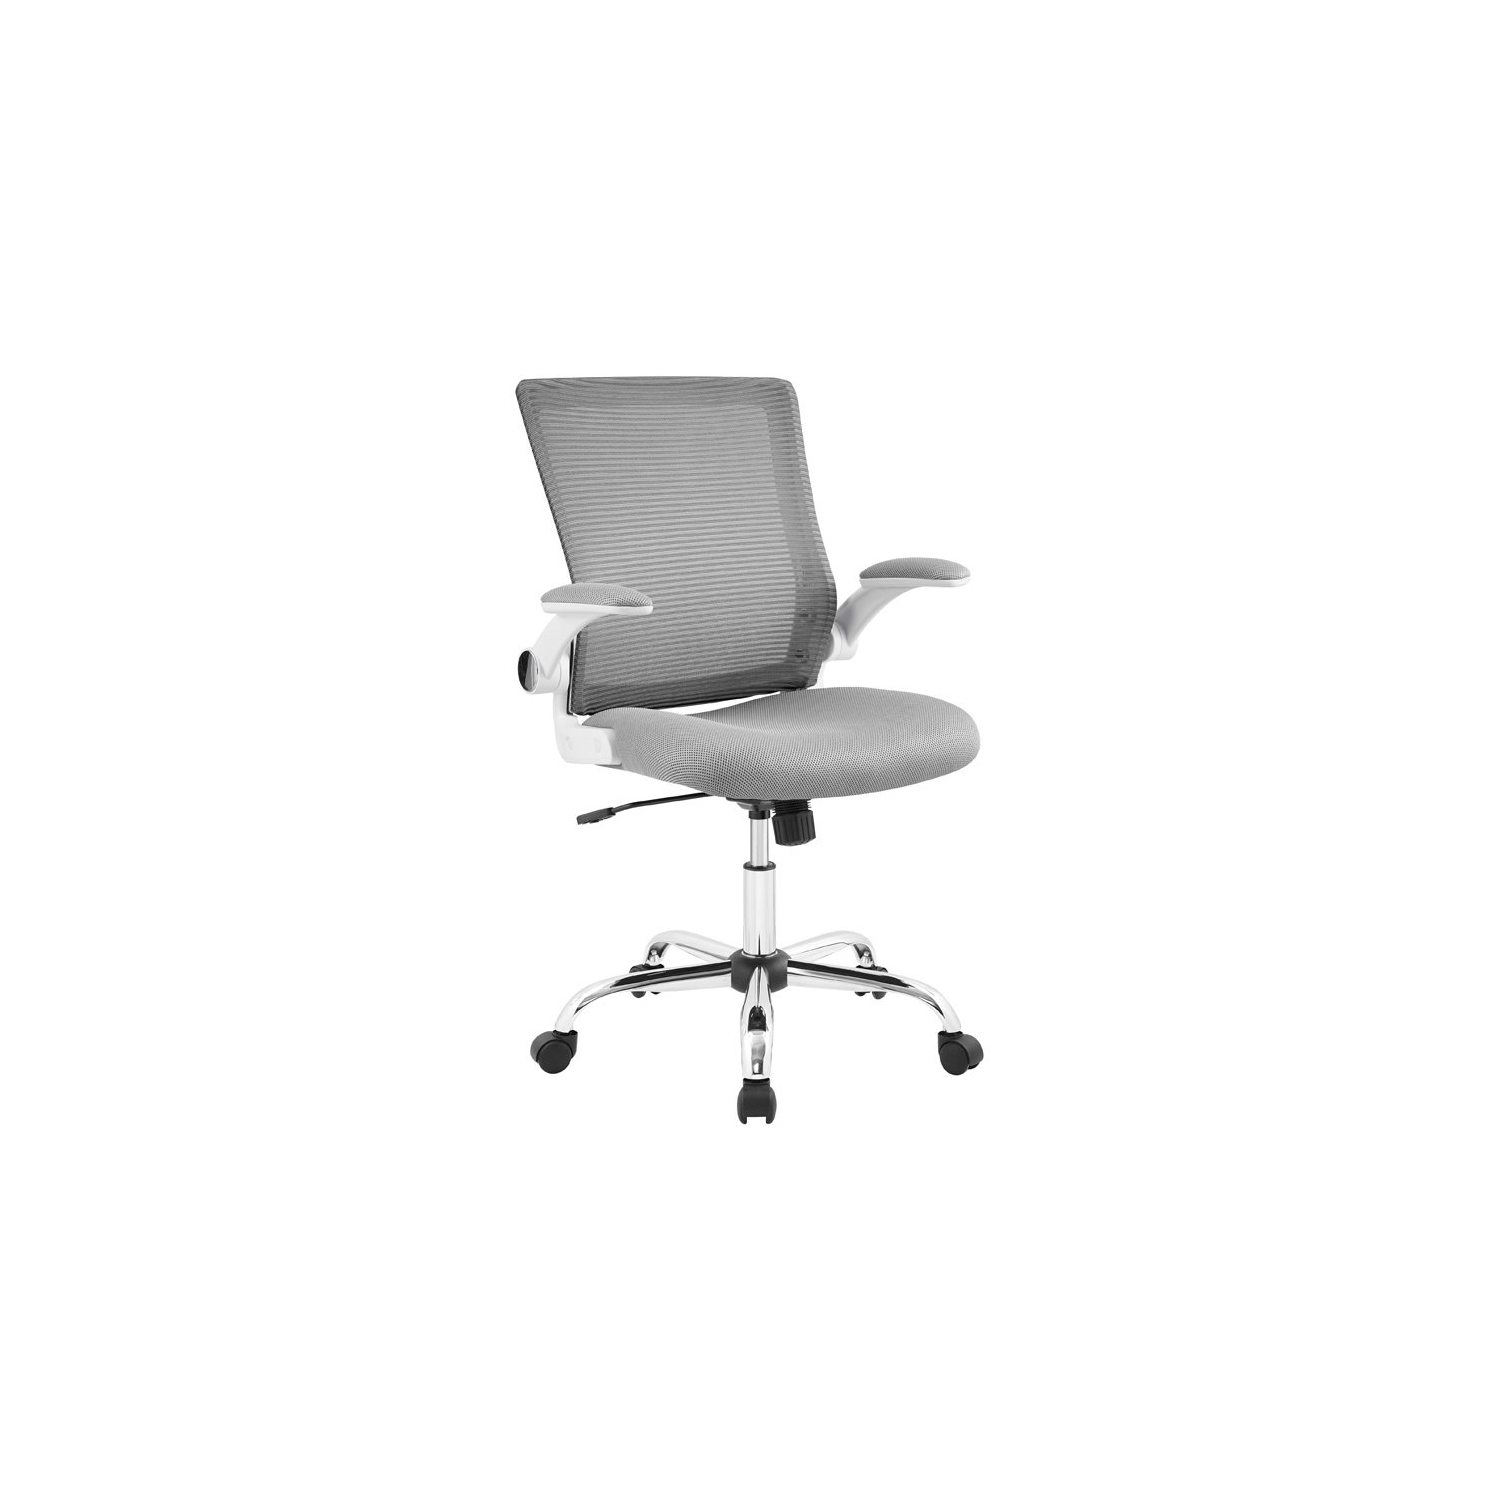 Serta Works Creativity Modern Gray Mesh Office Chair with Chrome Base